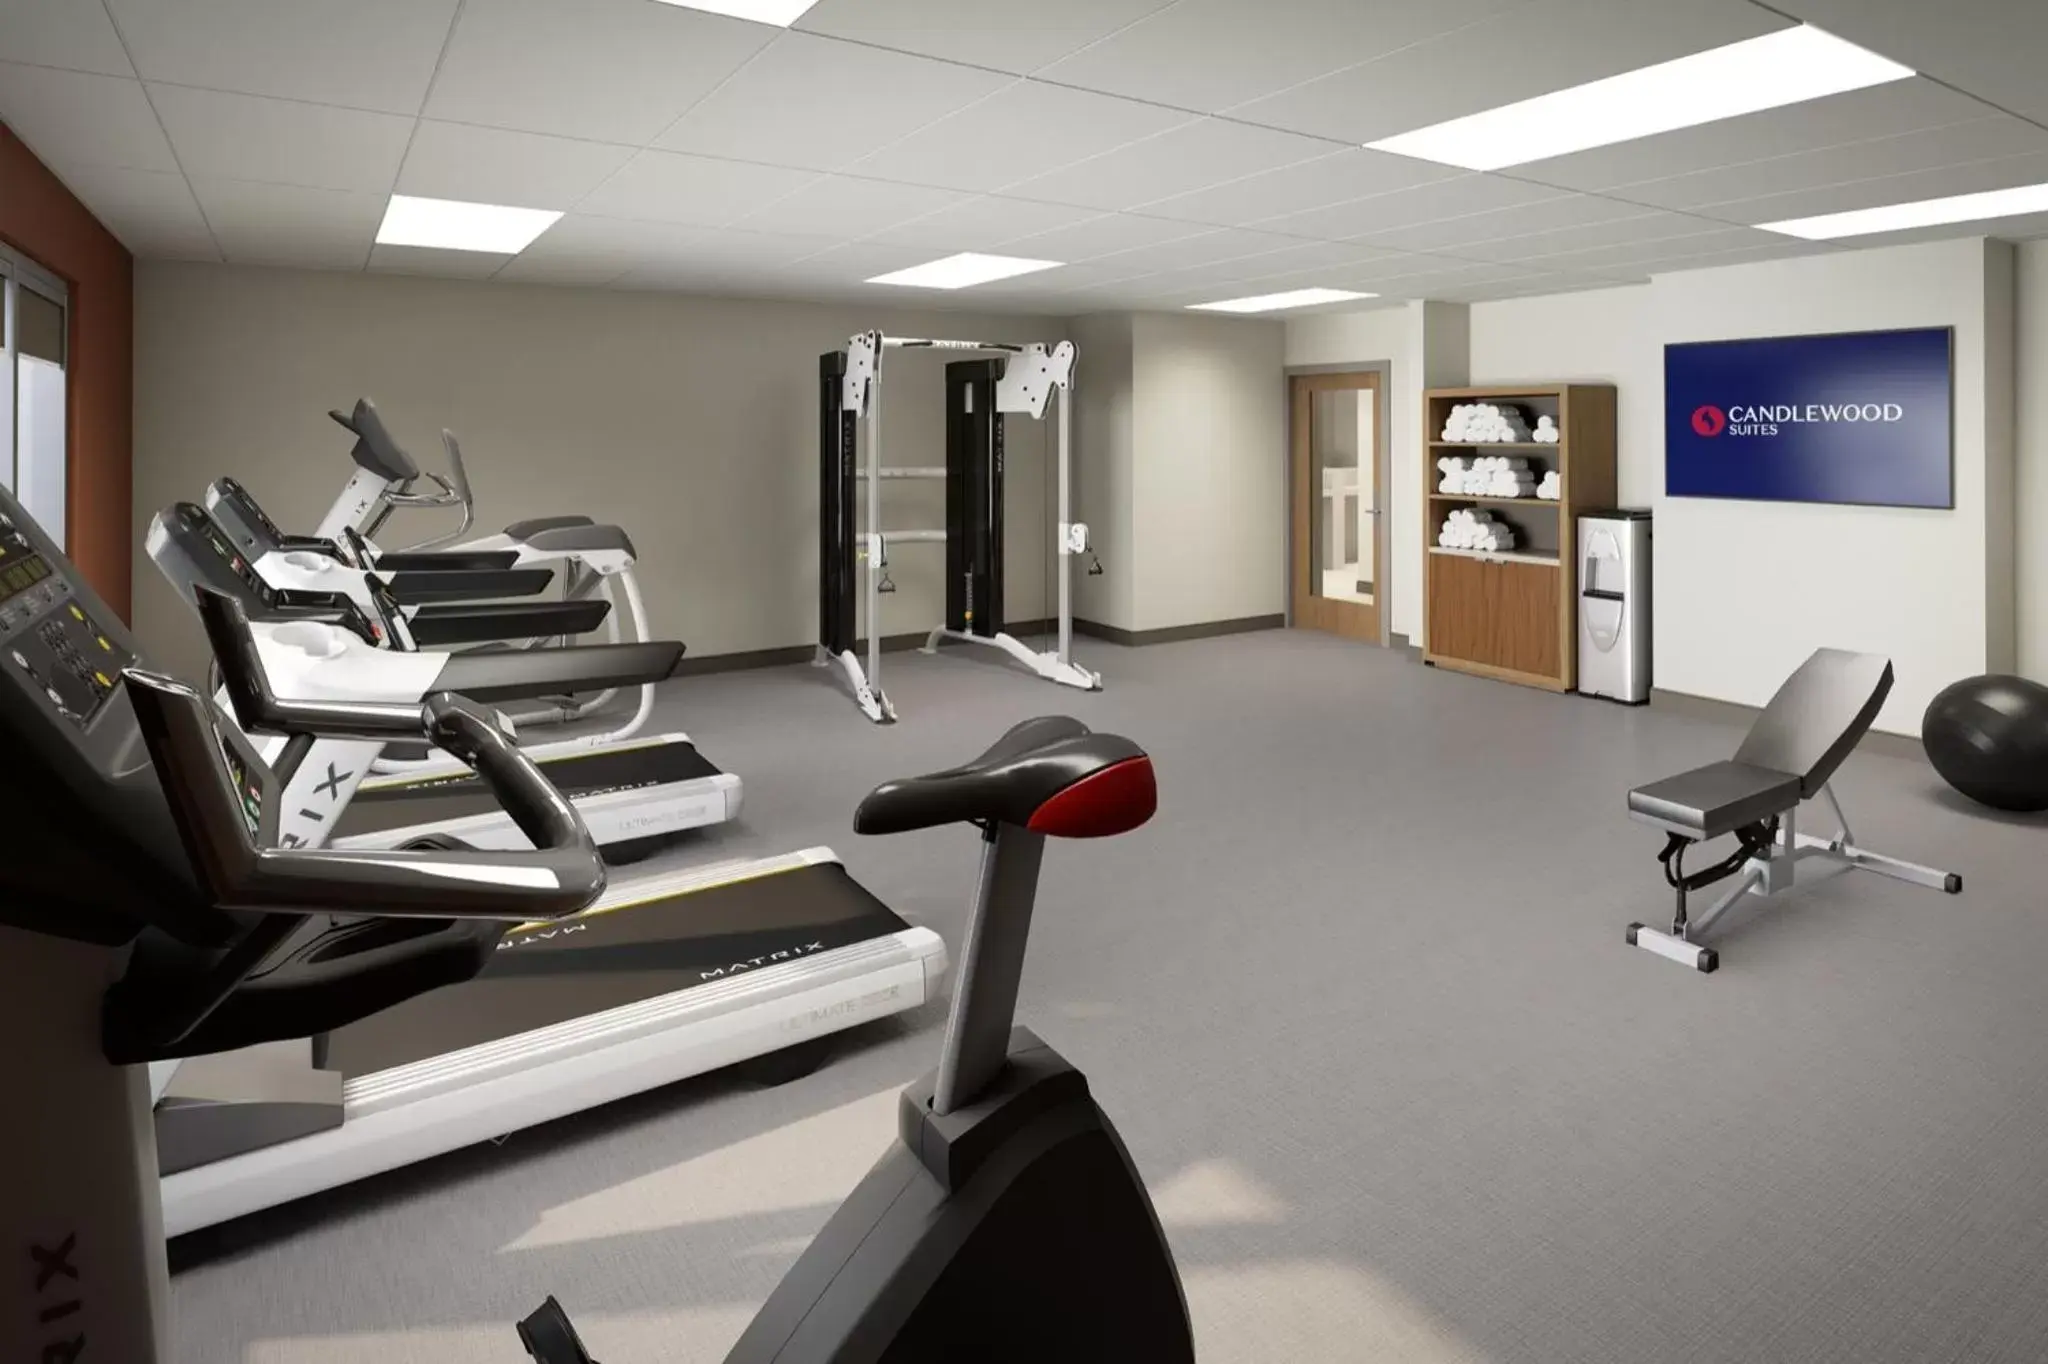 Fitness centre/facilities, Fitness Center/Facilities in Candlewood Suites - Loma Linda - San Bernardino S, an IHG Hotel